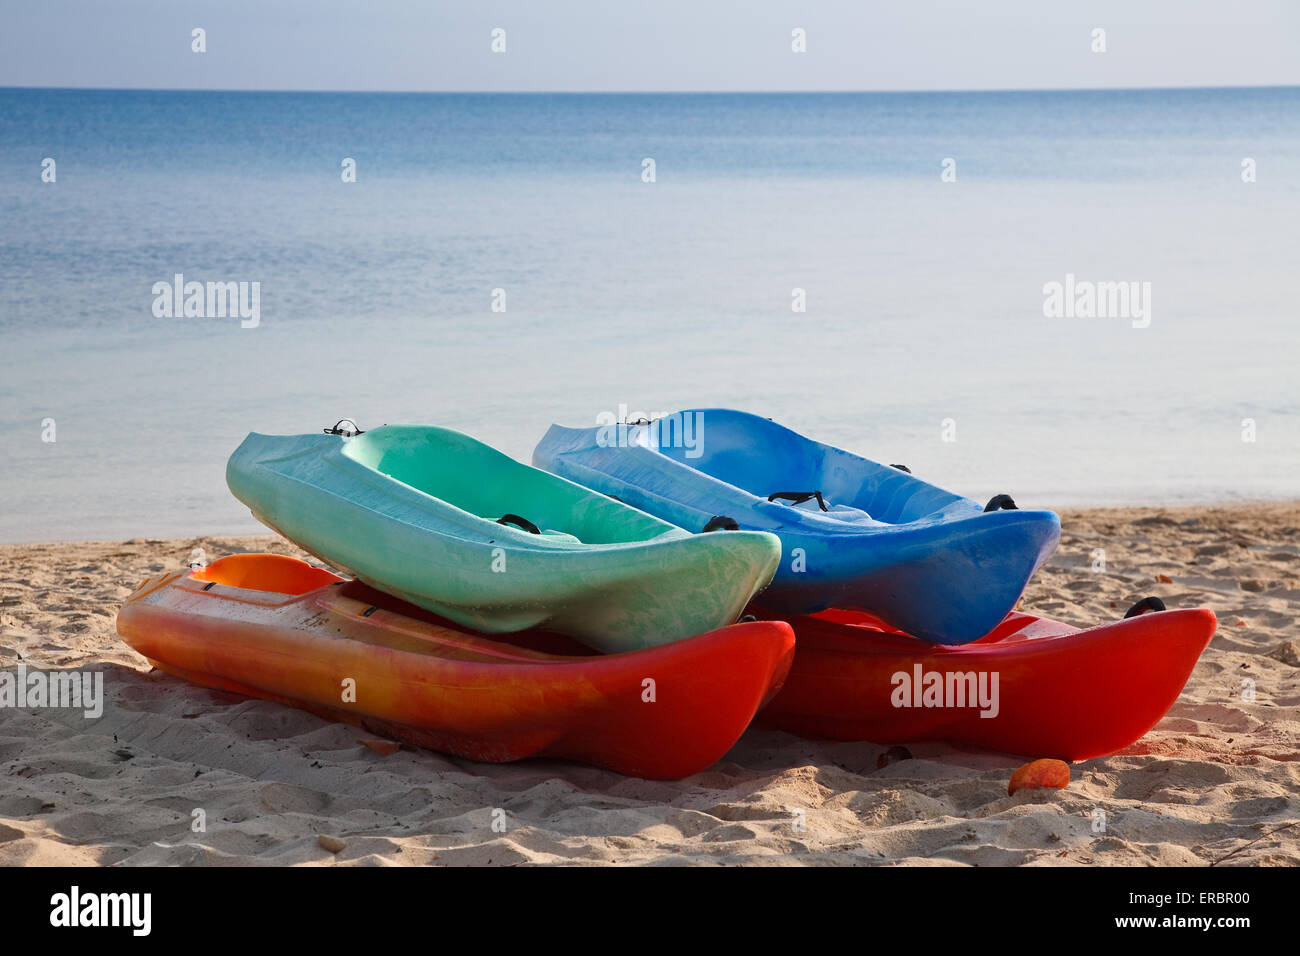 Recreational plastic boats on the beach Stock Photo